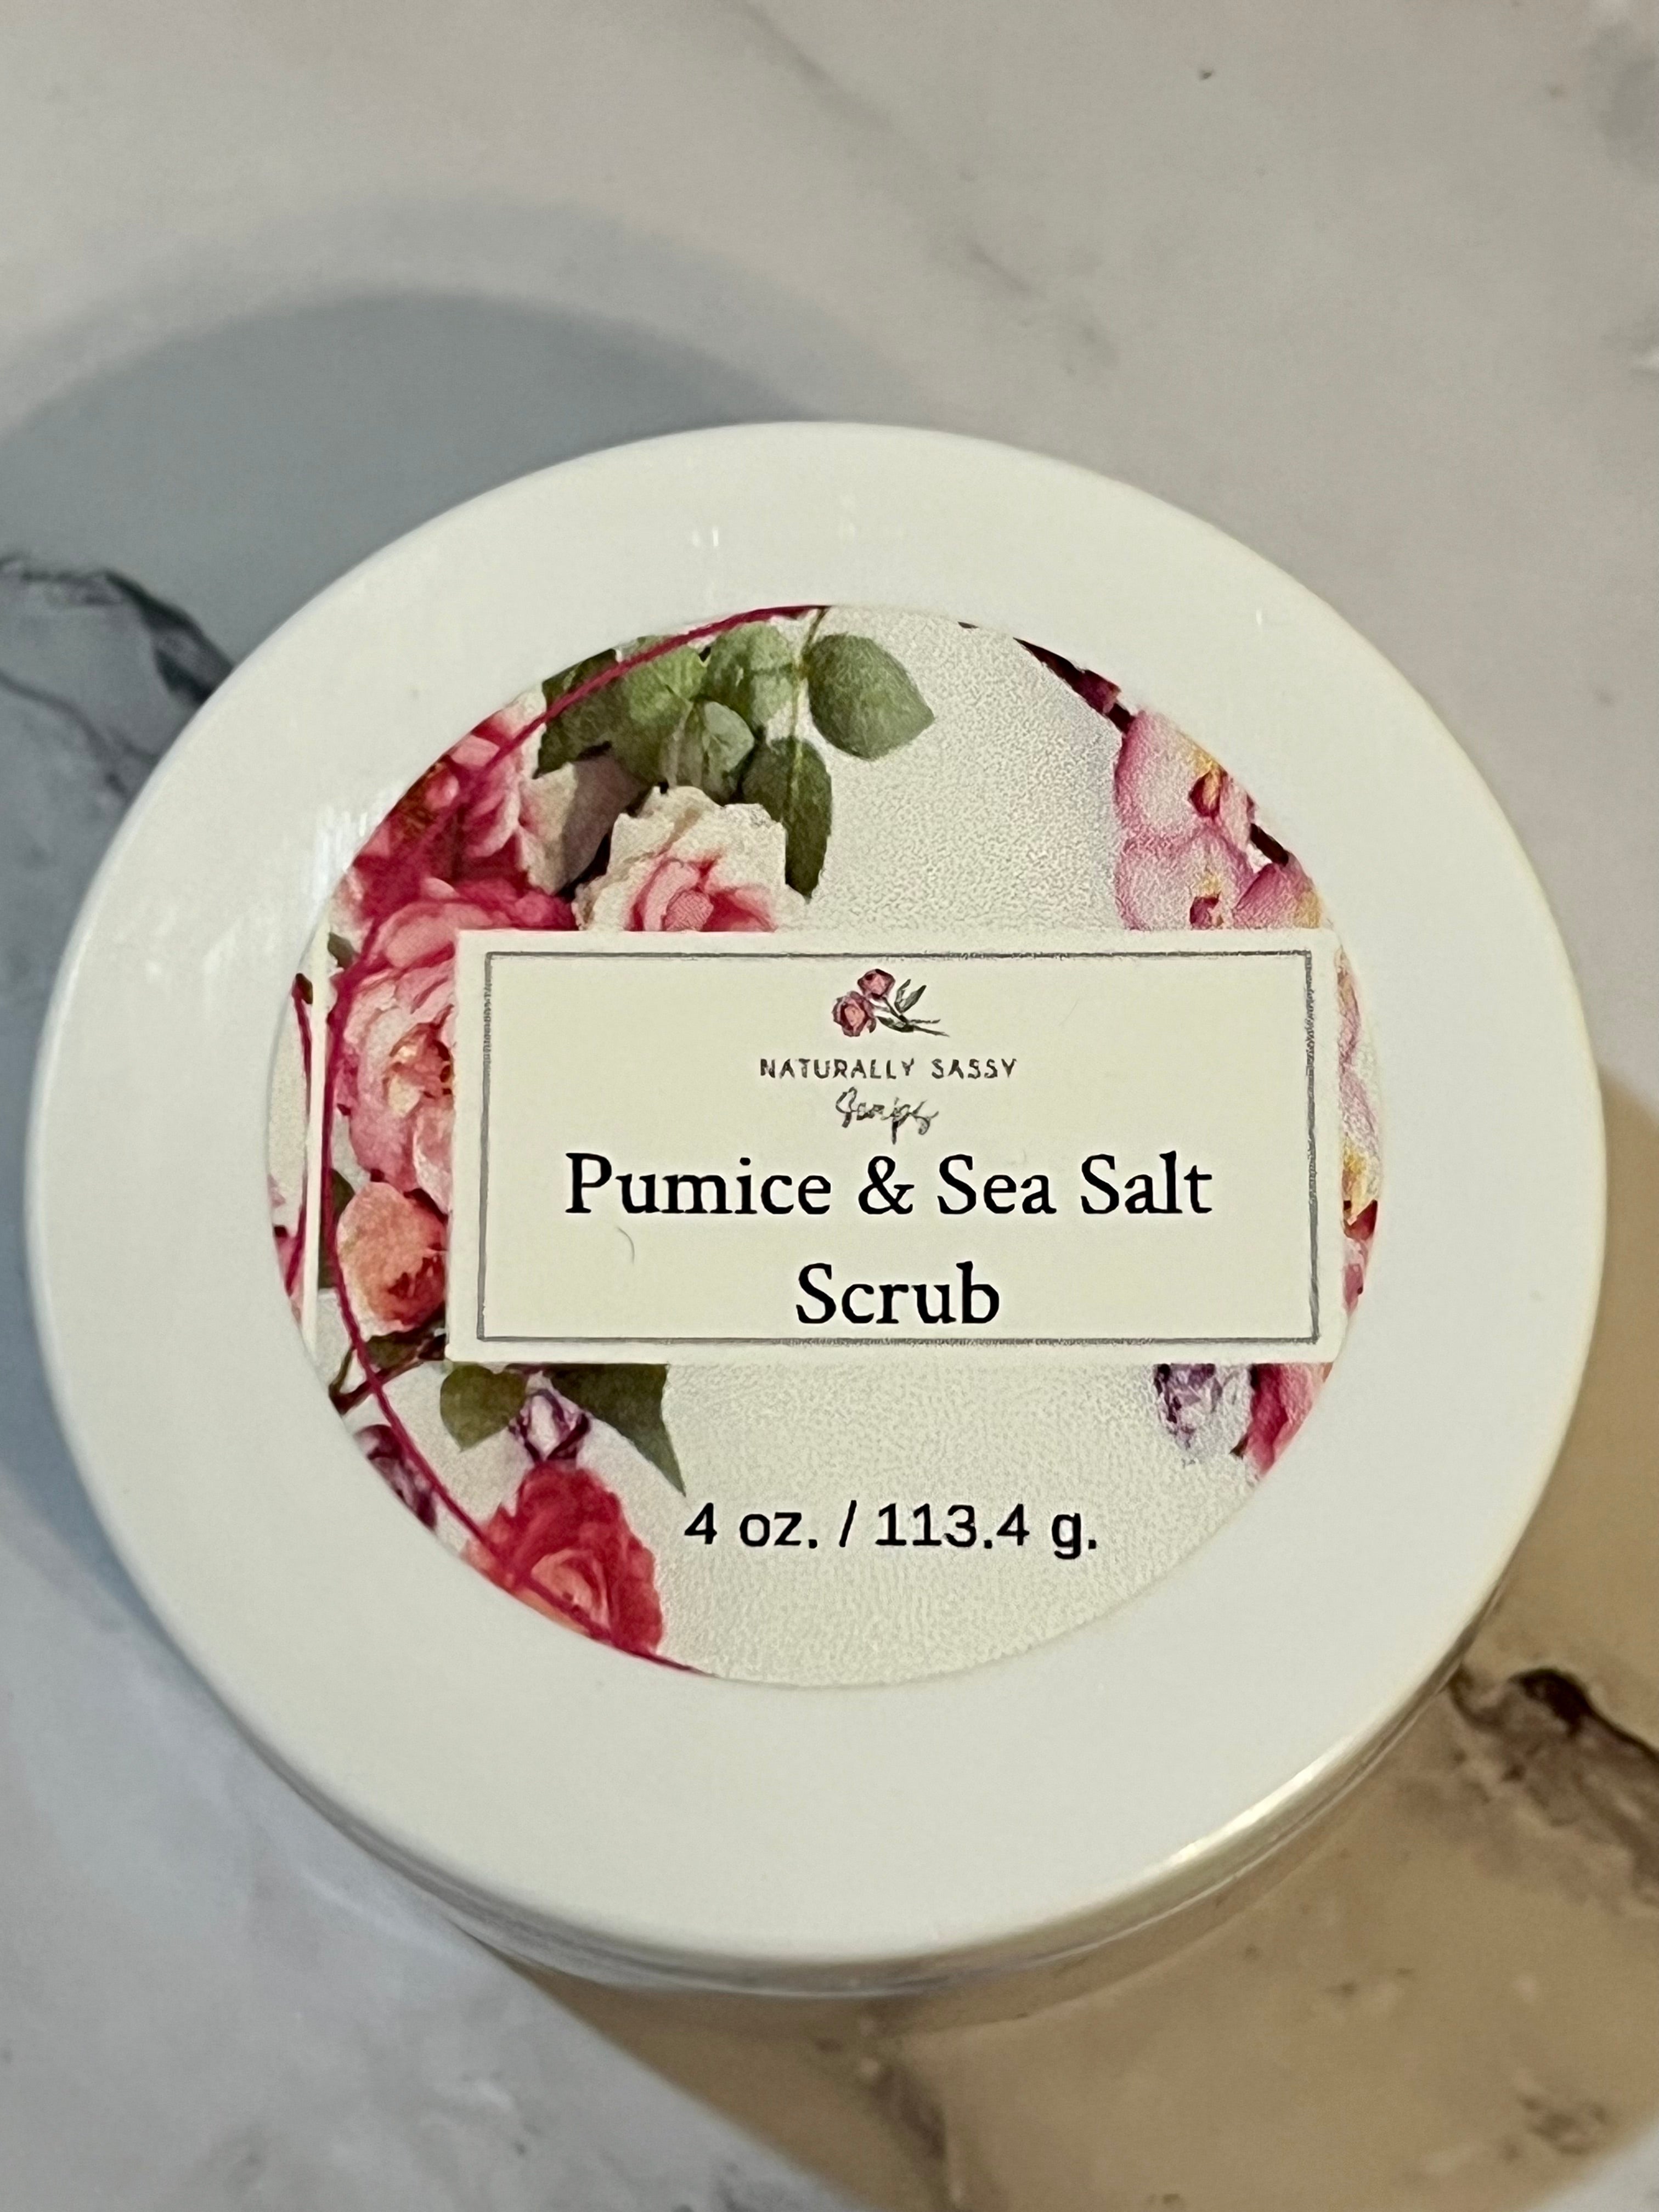 Pumice and Sea Salt Scrub